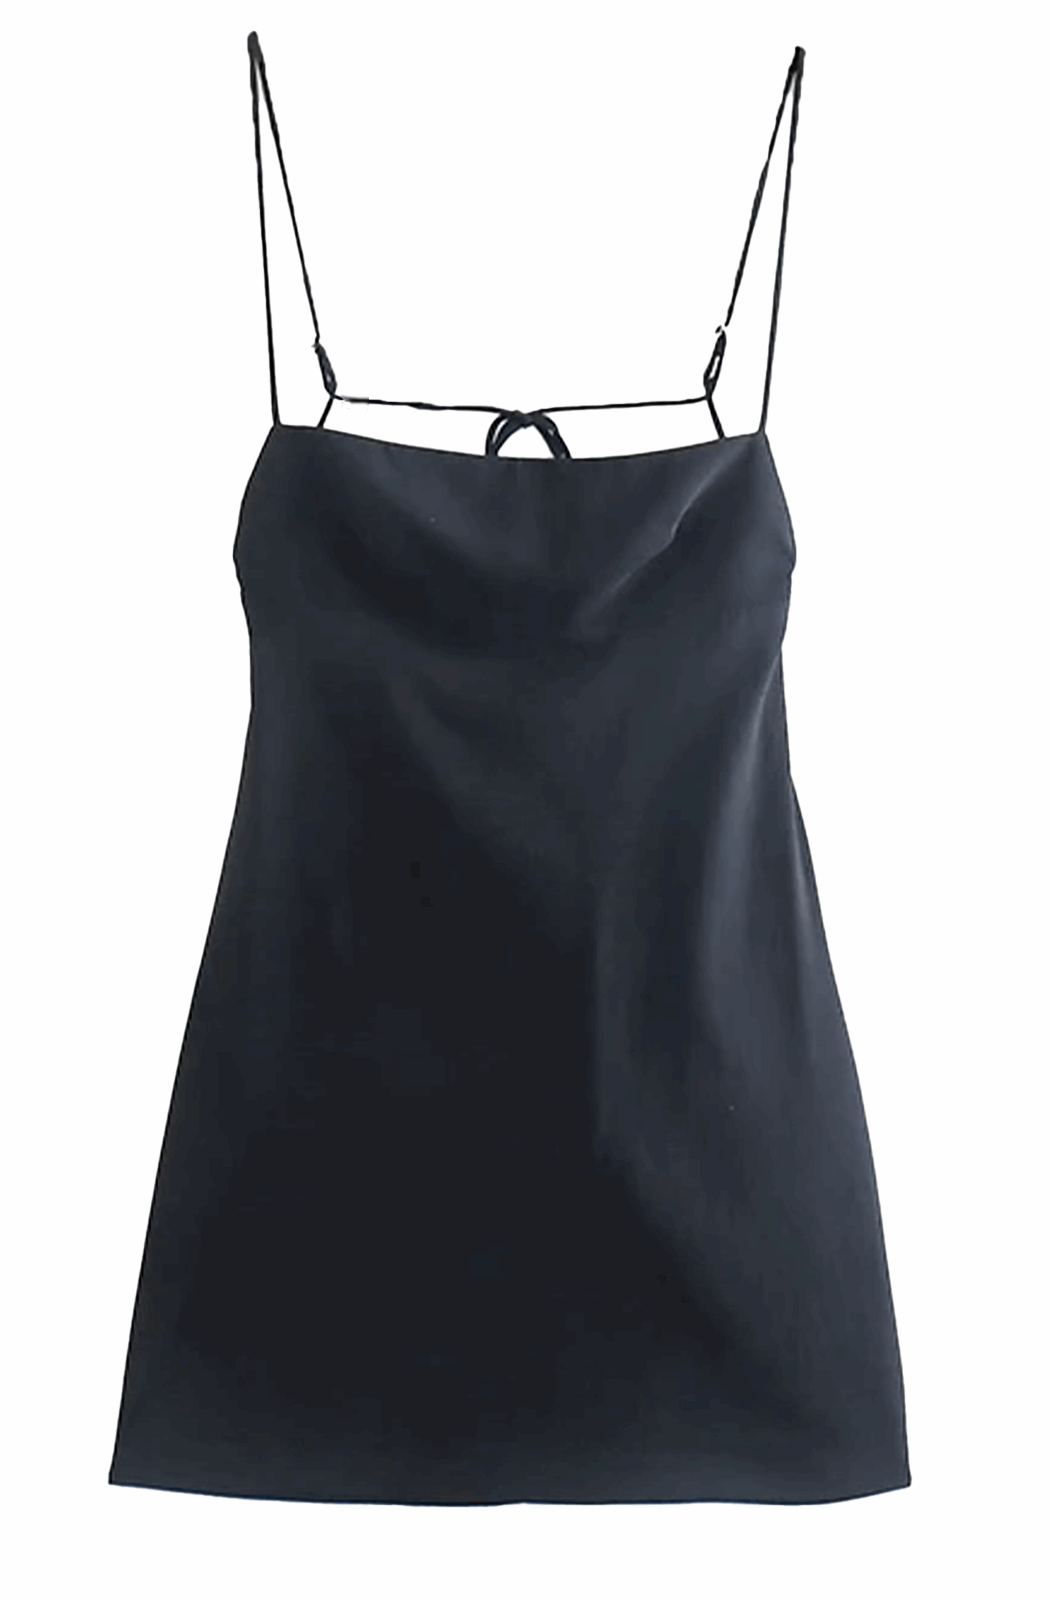 Backless dress with thin straps – Parinmi